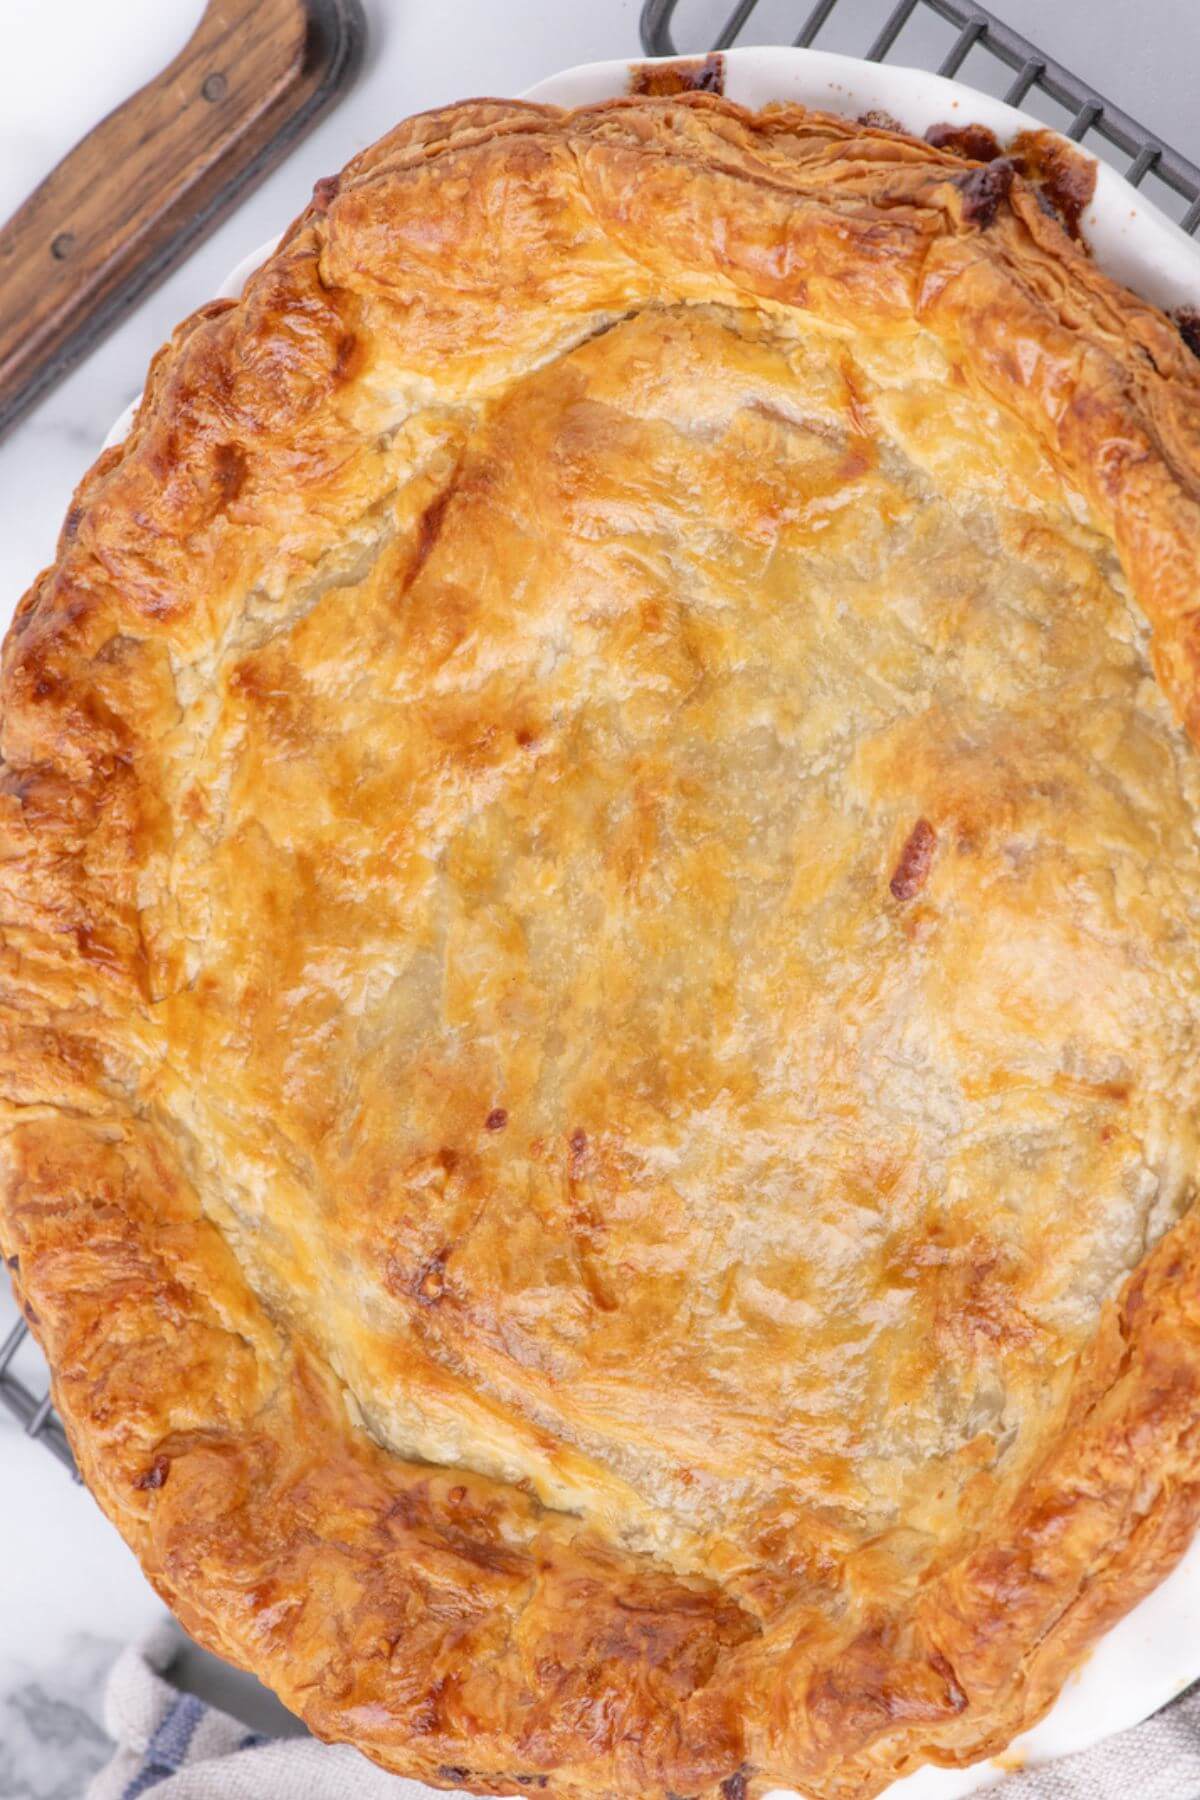 A whole Irish steak pie pie has a beautiful golden flaky crust.